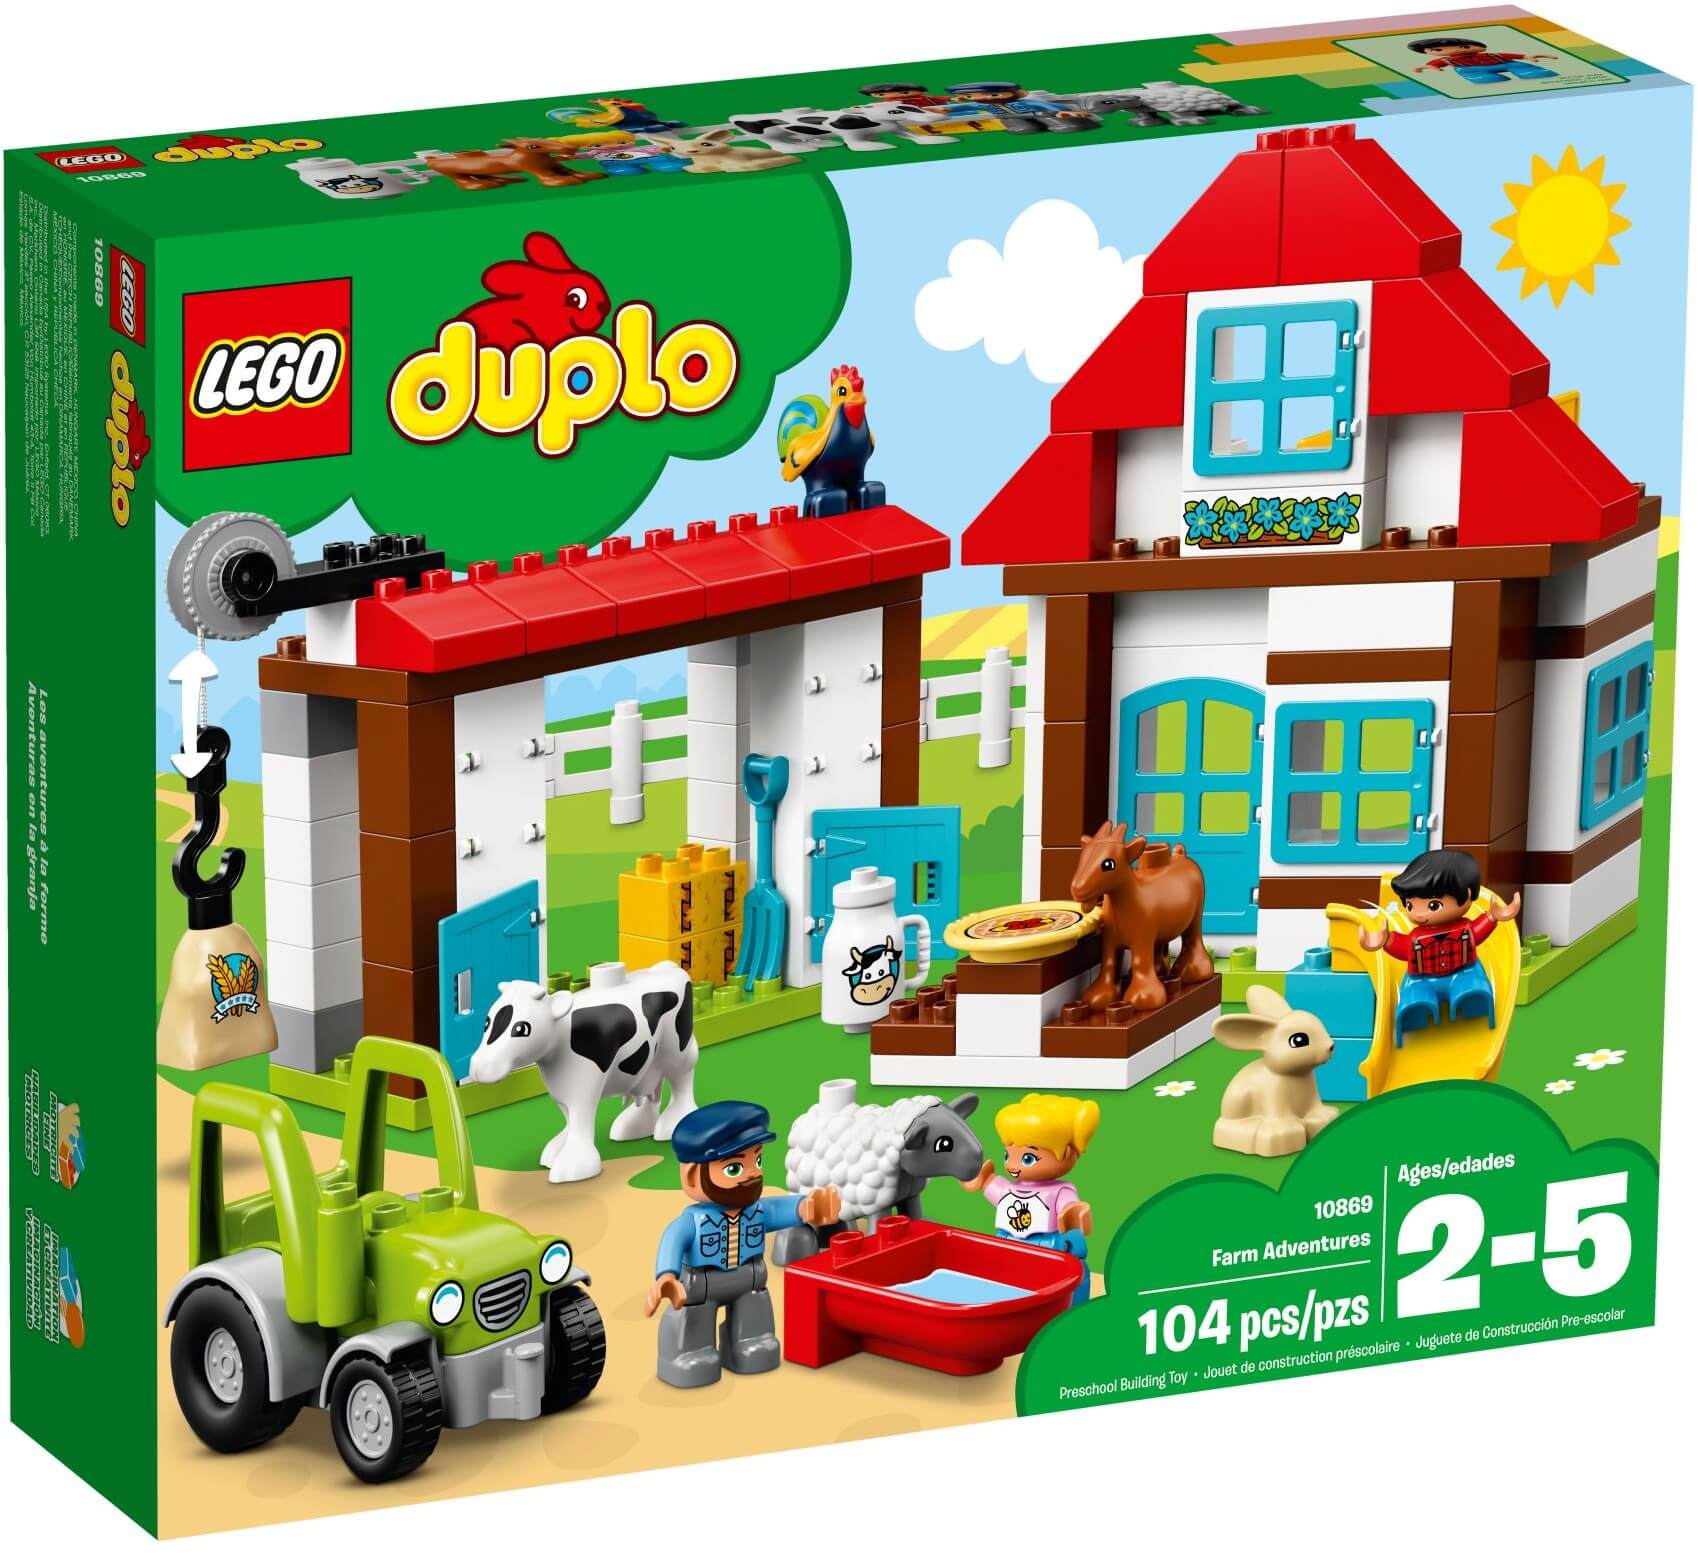 Đồ chơi Lego Lego Duplo cho bé 2 tuổi